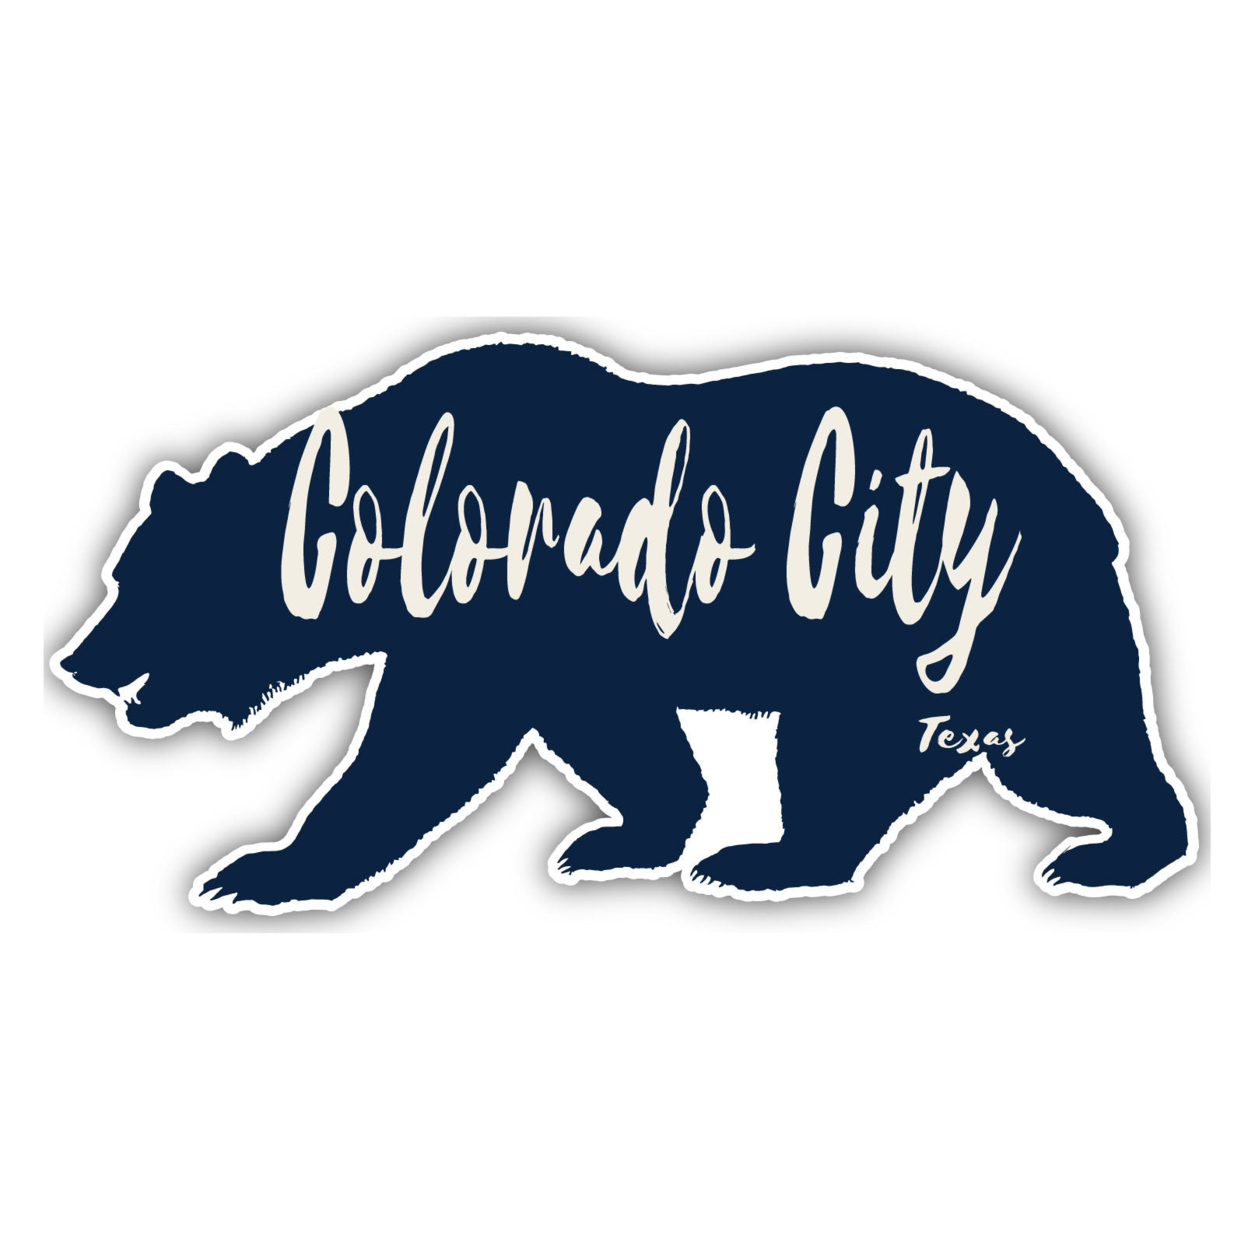 Colorado City Texas Souvenir Decorative Stickers (Choose Theme And Size) - Single Unit, 2-Inch, Bear